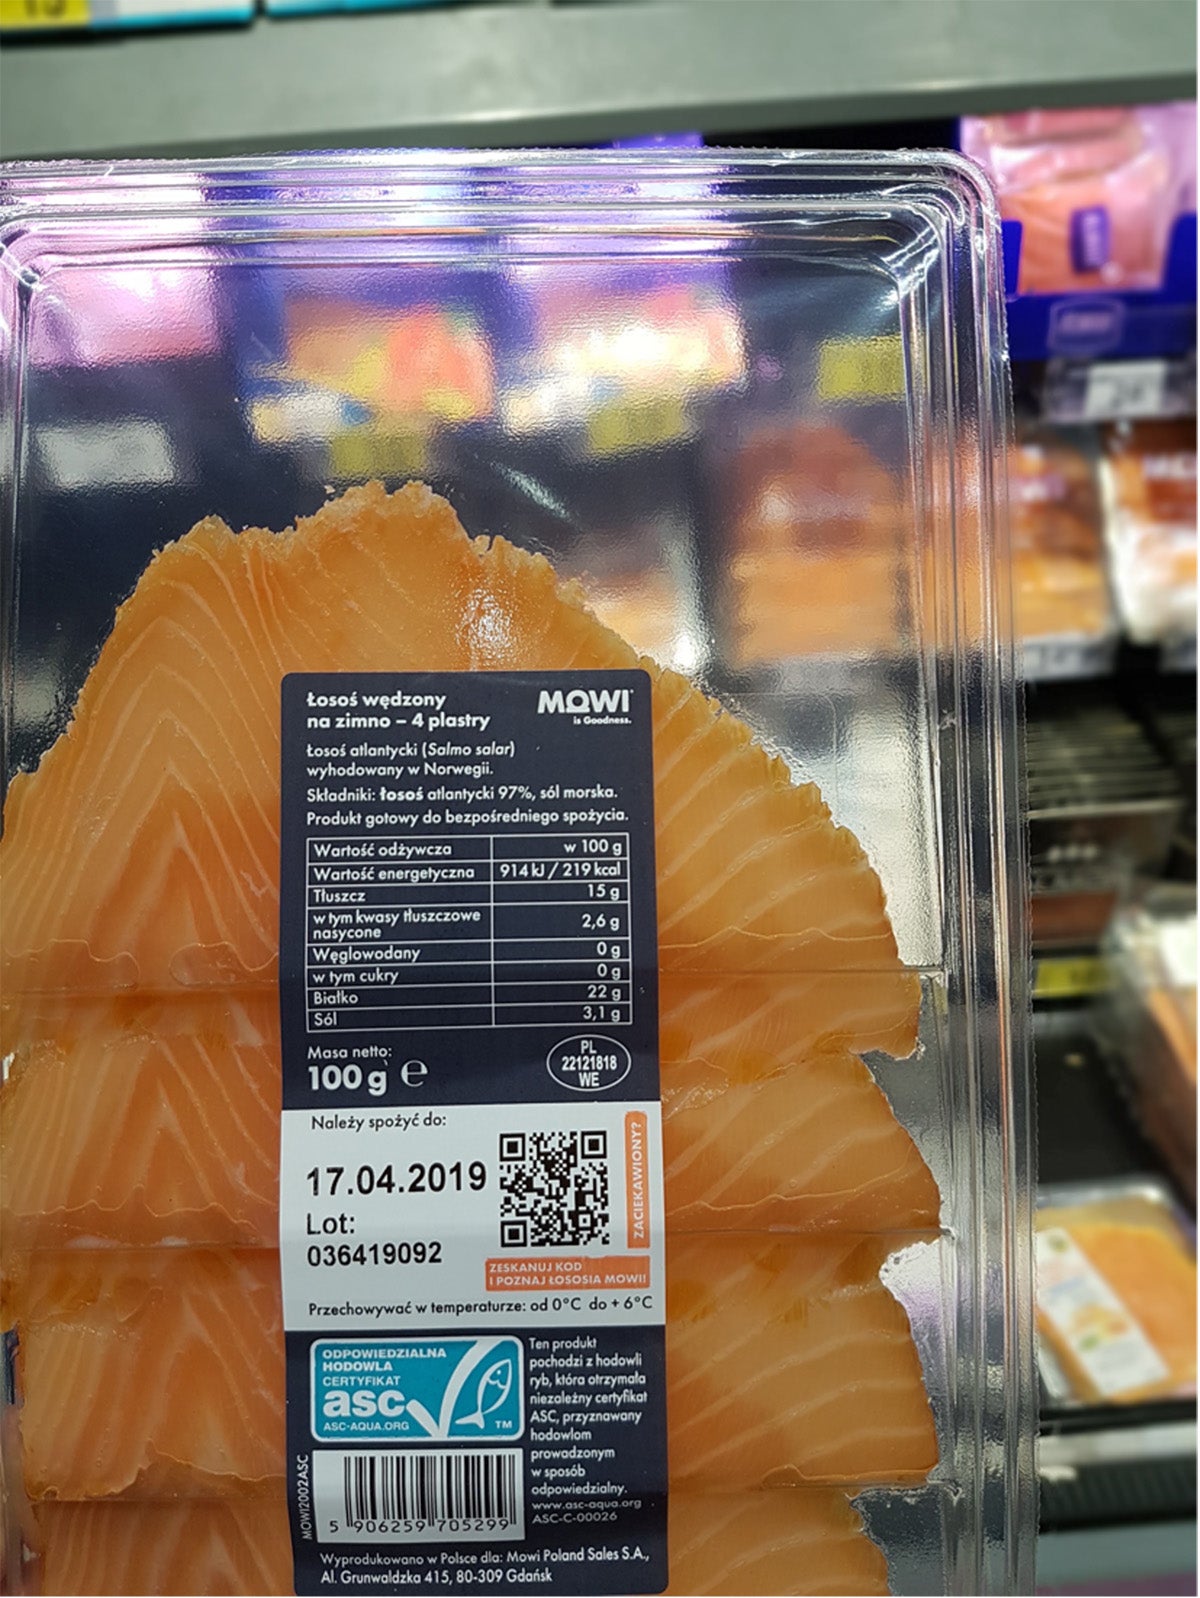 MOWI Salmon with batch level GS1 digital link